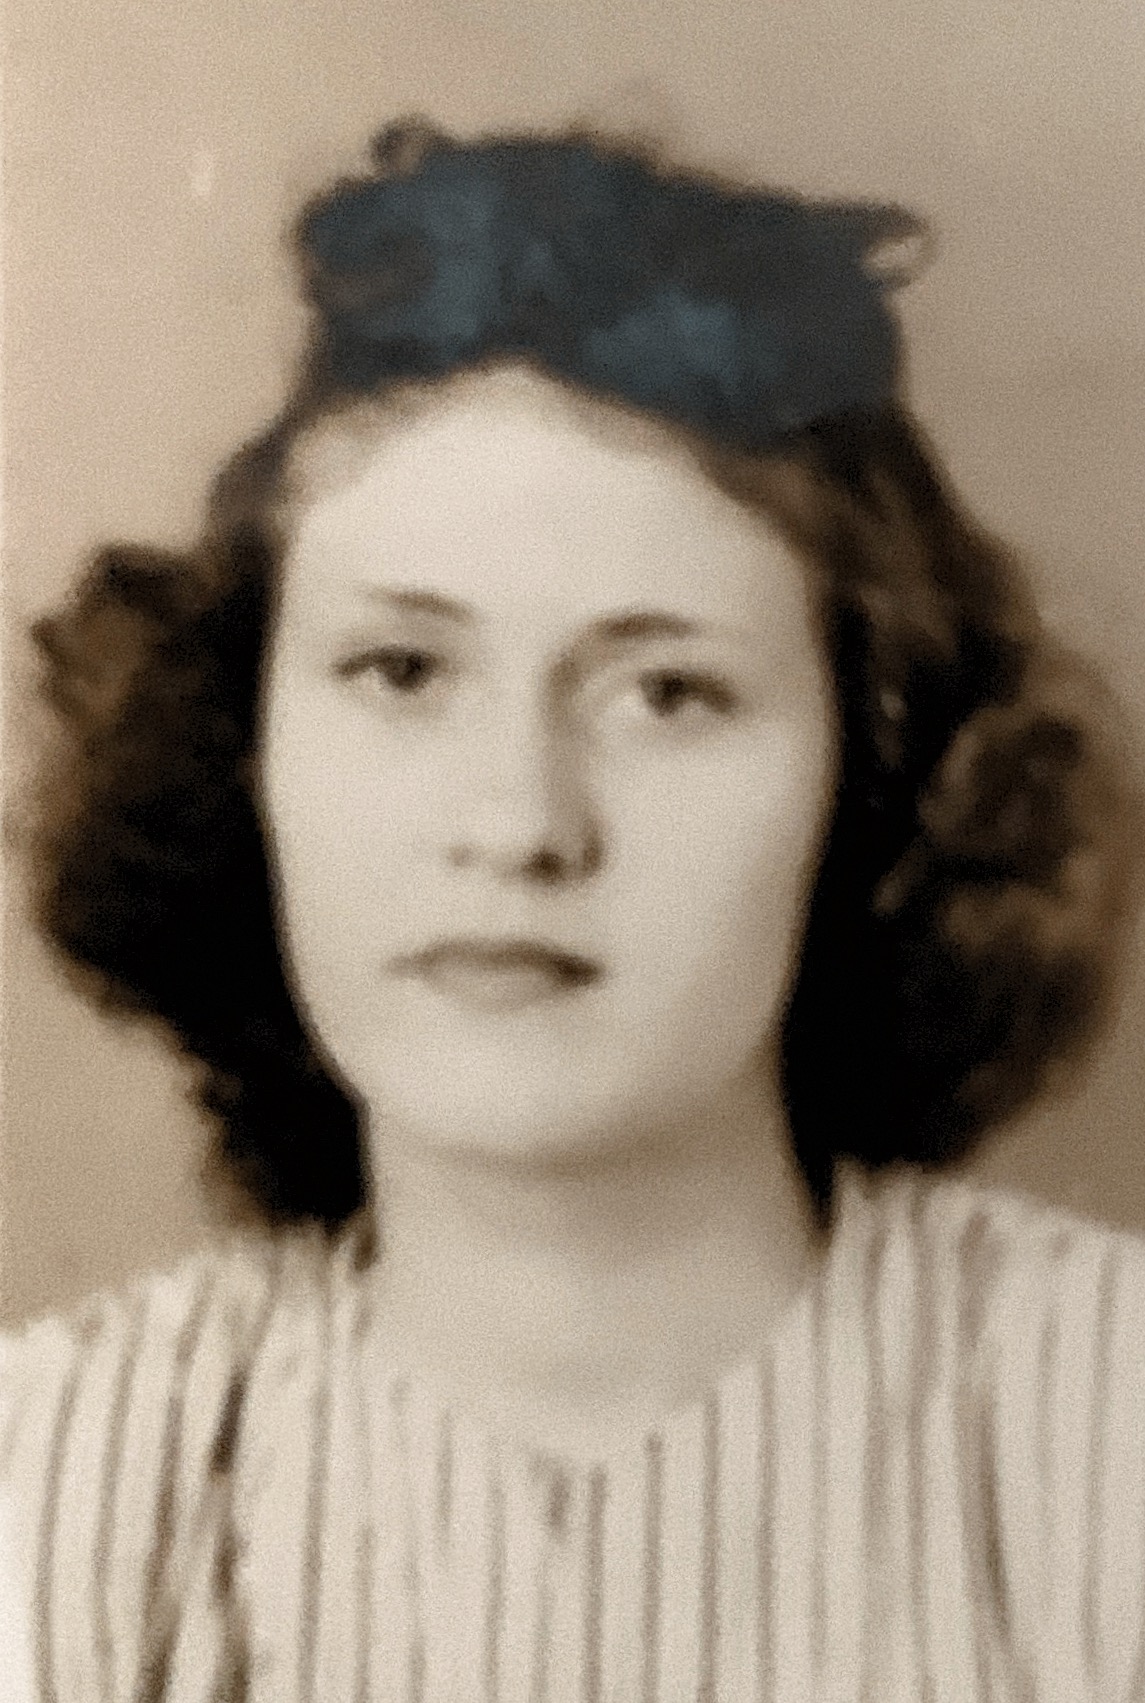 Betty Thomas  School Days  1946-47
Senior picture Lake Wales FL